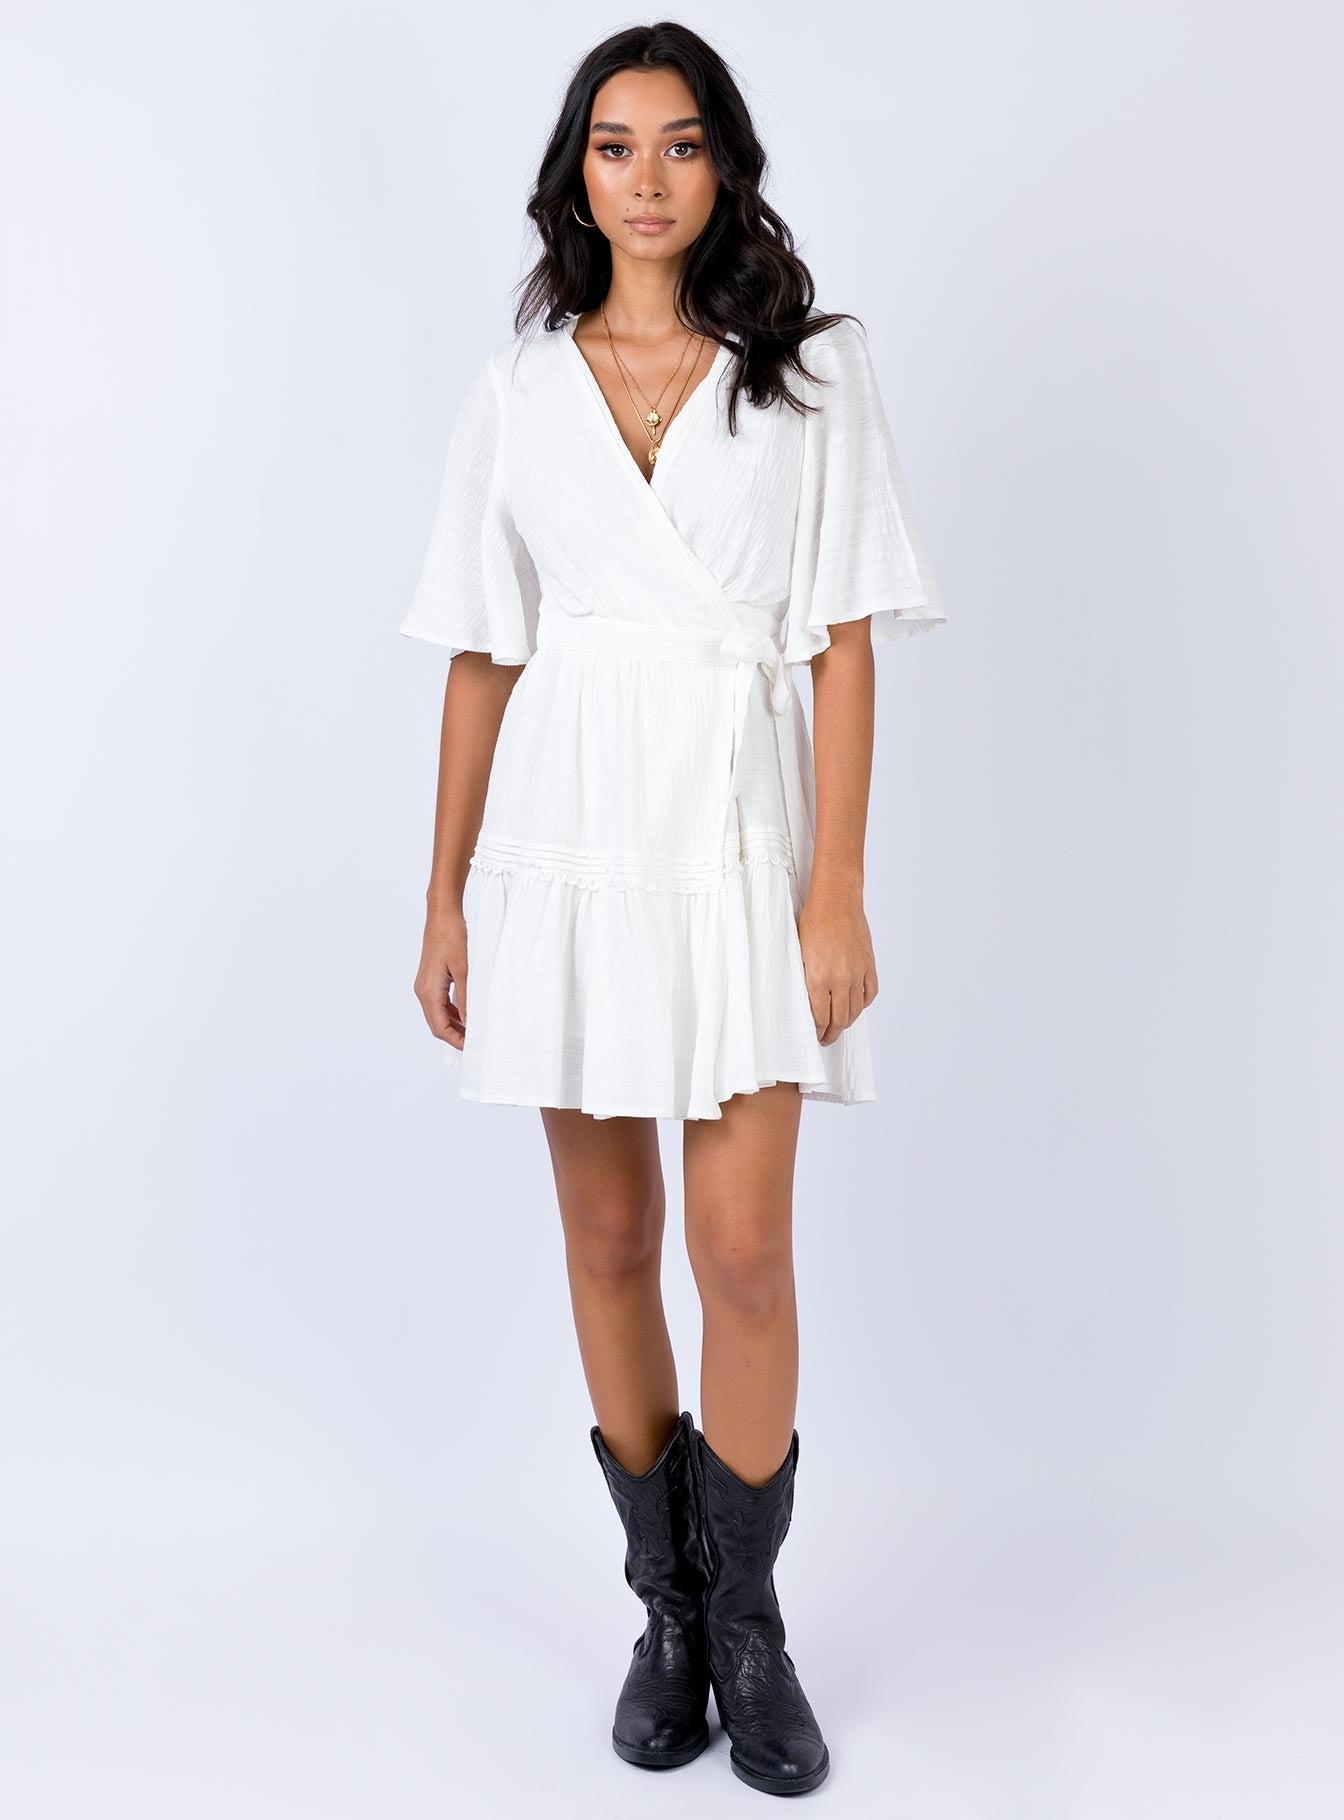 Princess Polly White Wrap Dress Top Sellers, 52% OFF | edetaria.com